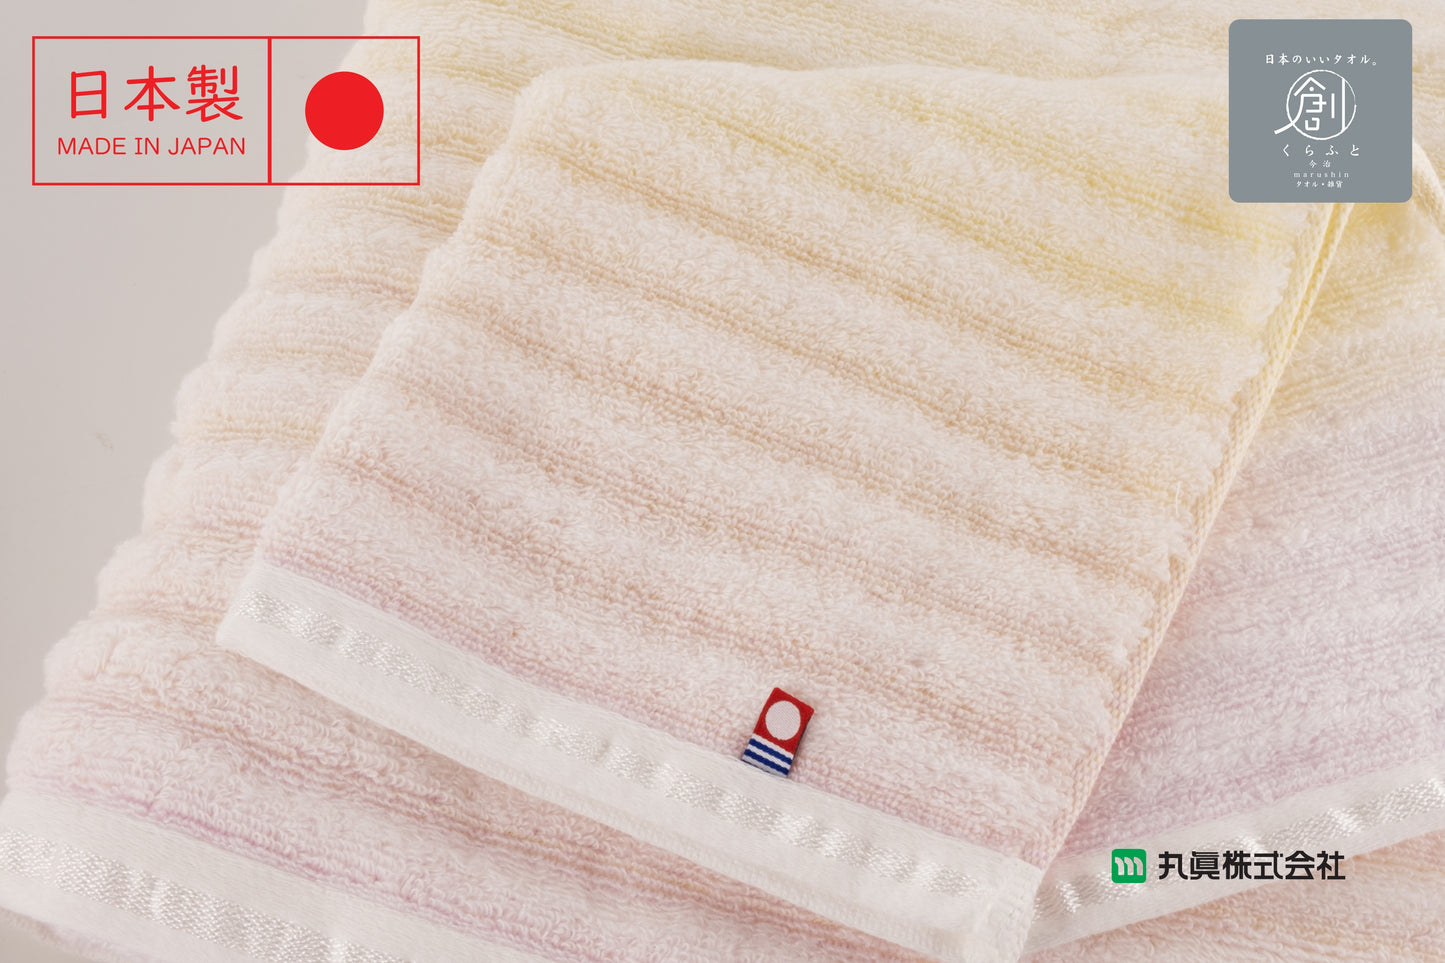 Imabari "Craft" Star plus Shine Zero Twist Towel